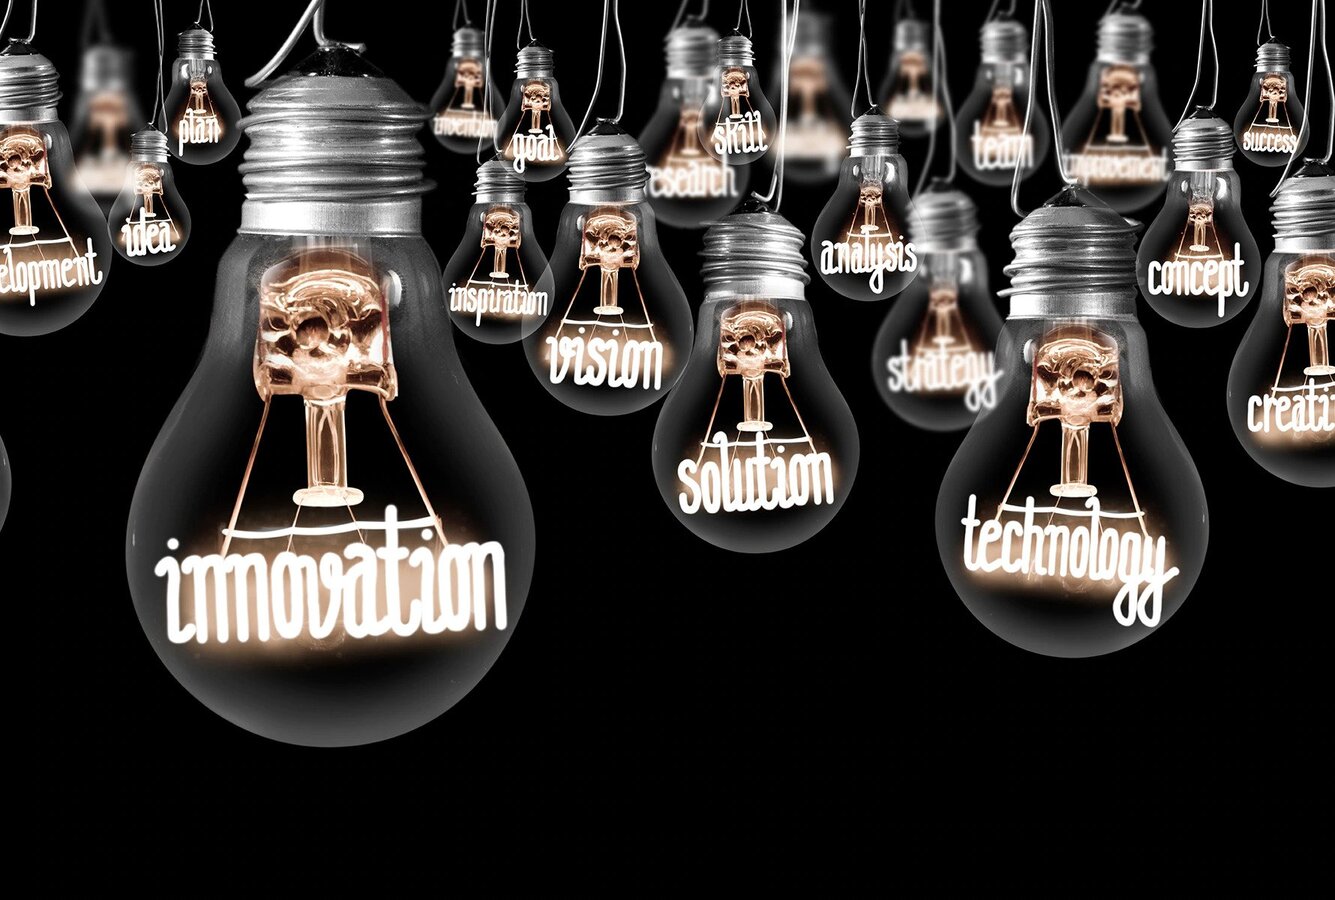 Lightbulbs with illuminated words inside them: technology, innovation, vision, etc.